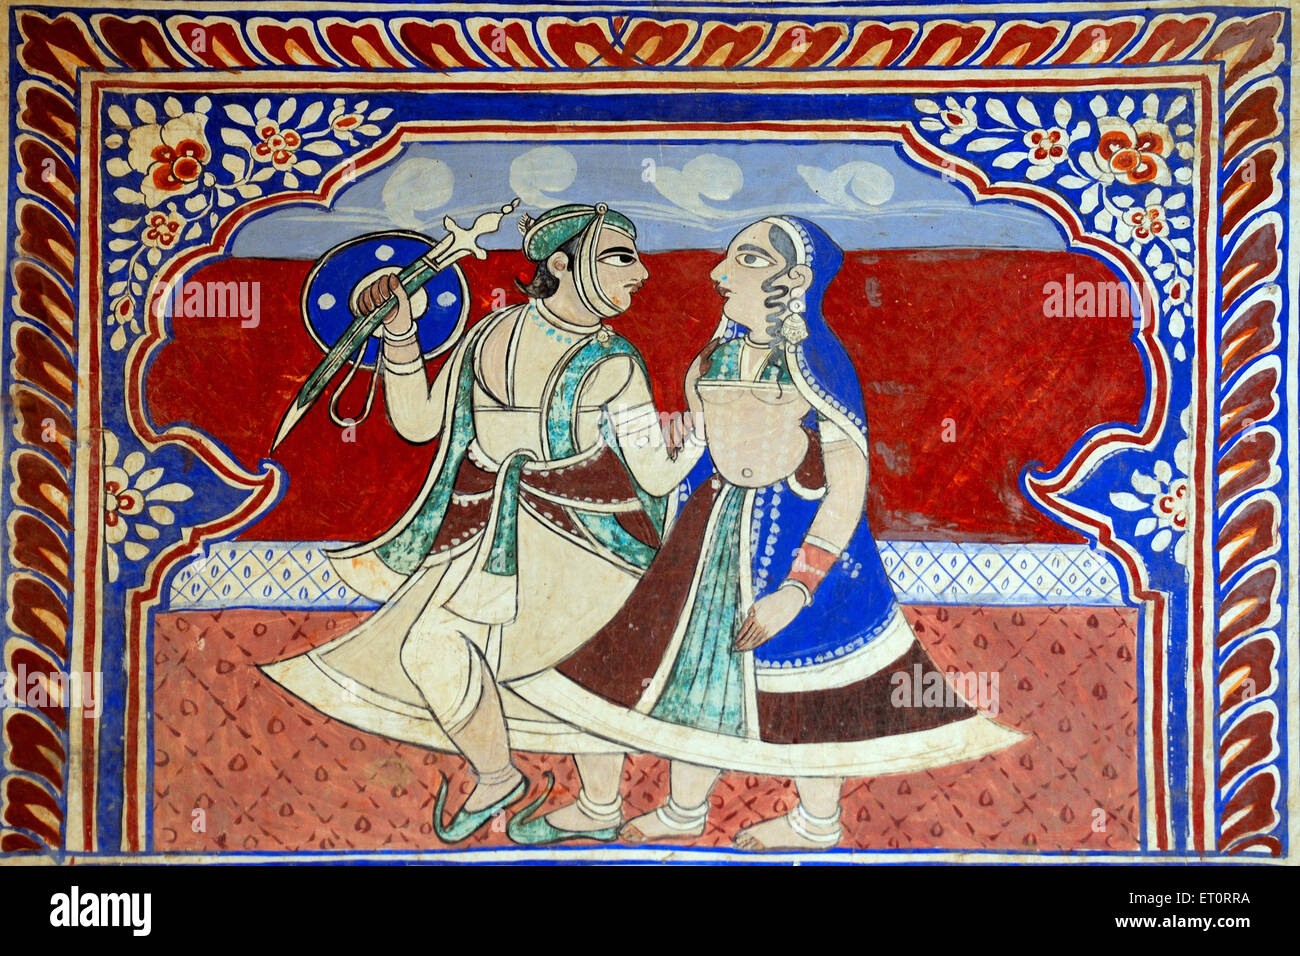 Paintings of royal person on wall of haveli ; Fatehpur Shekhavati ; Rajasthan ; India Stock Photo